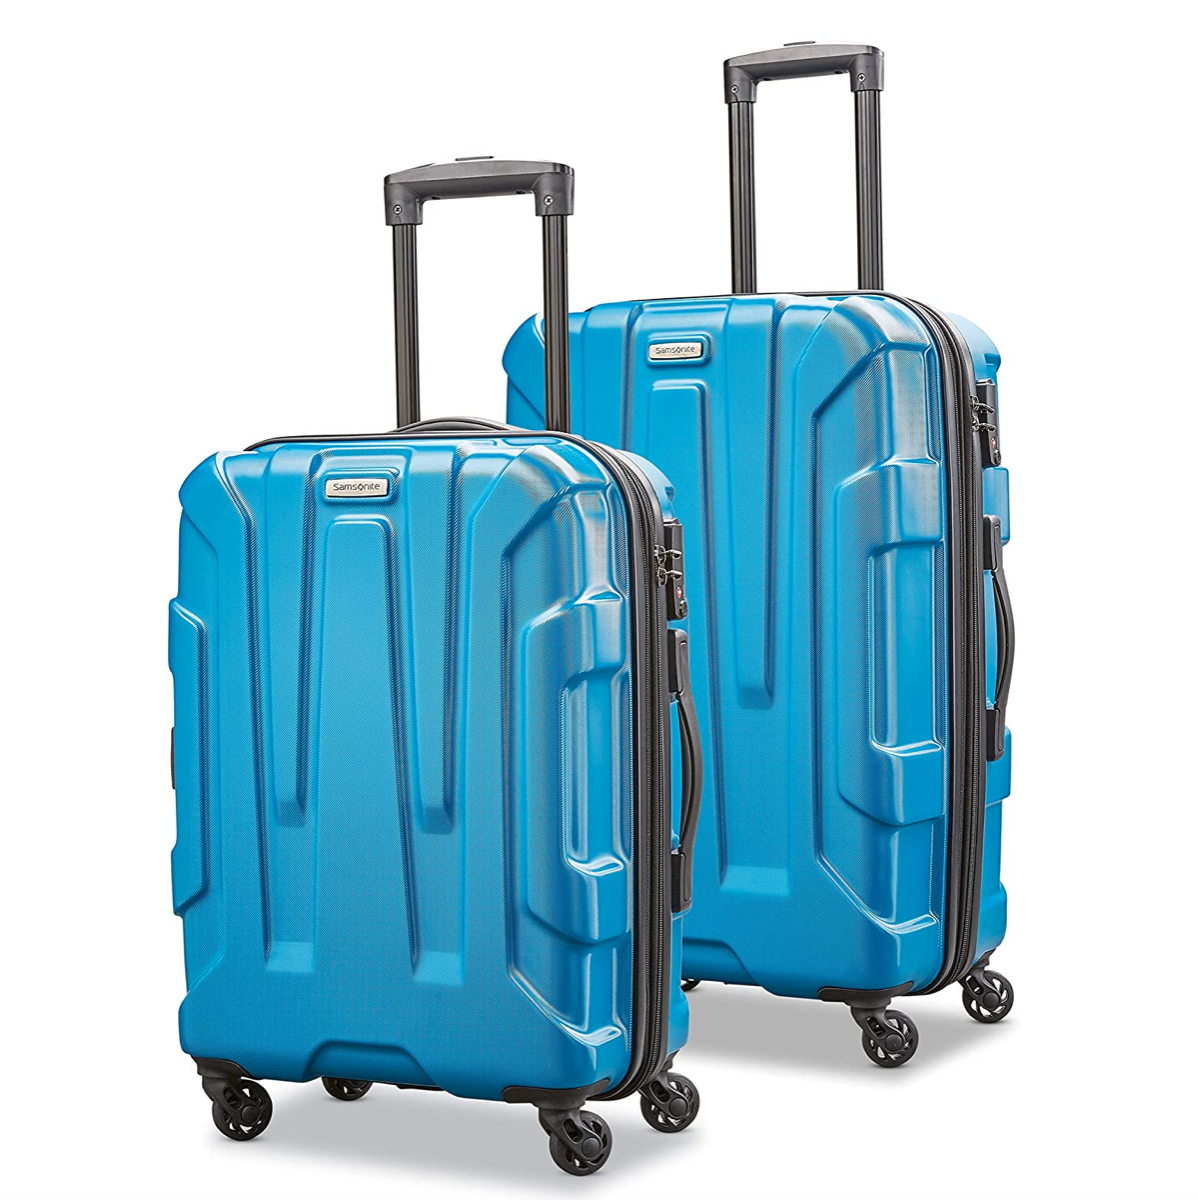 prime-members-2-piece-samsonite-hardside-luggage-sets-from-100